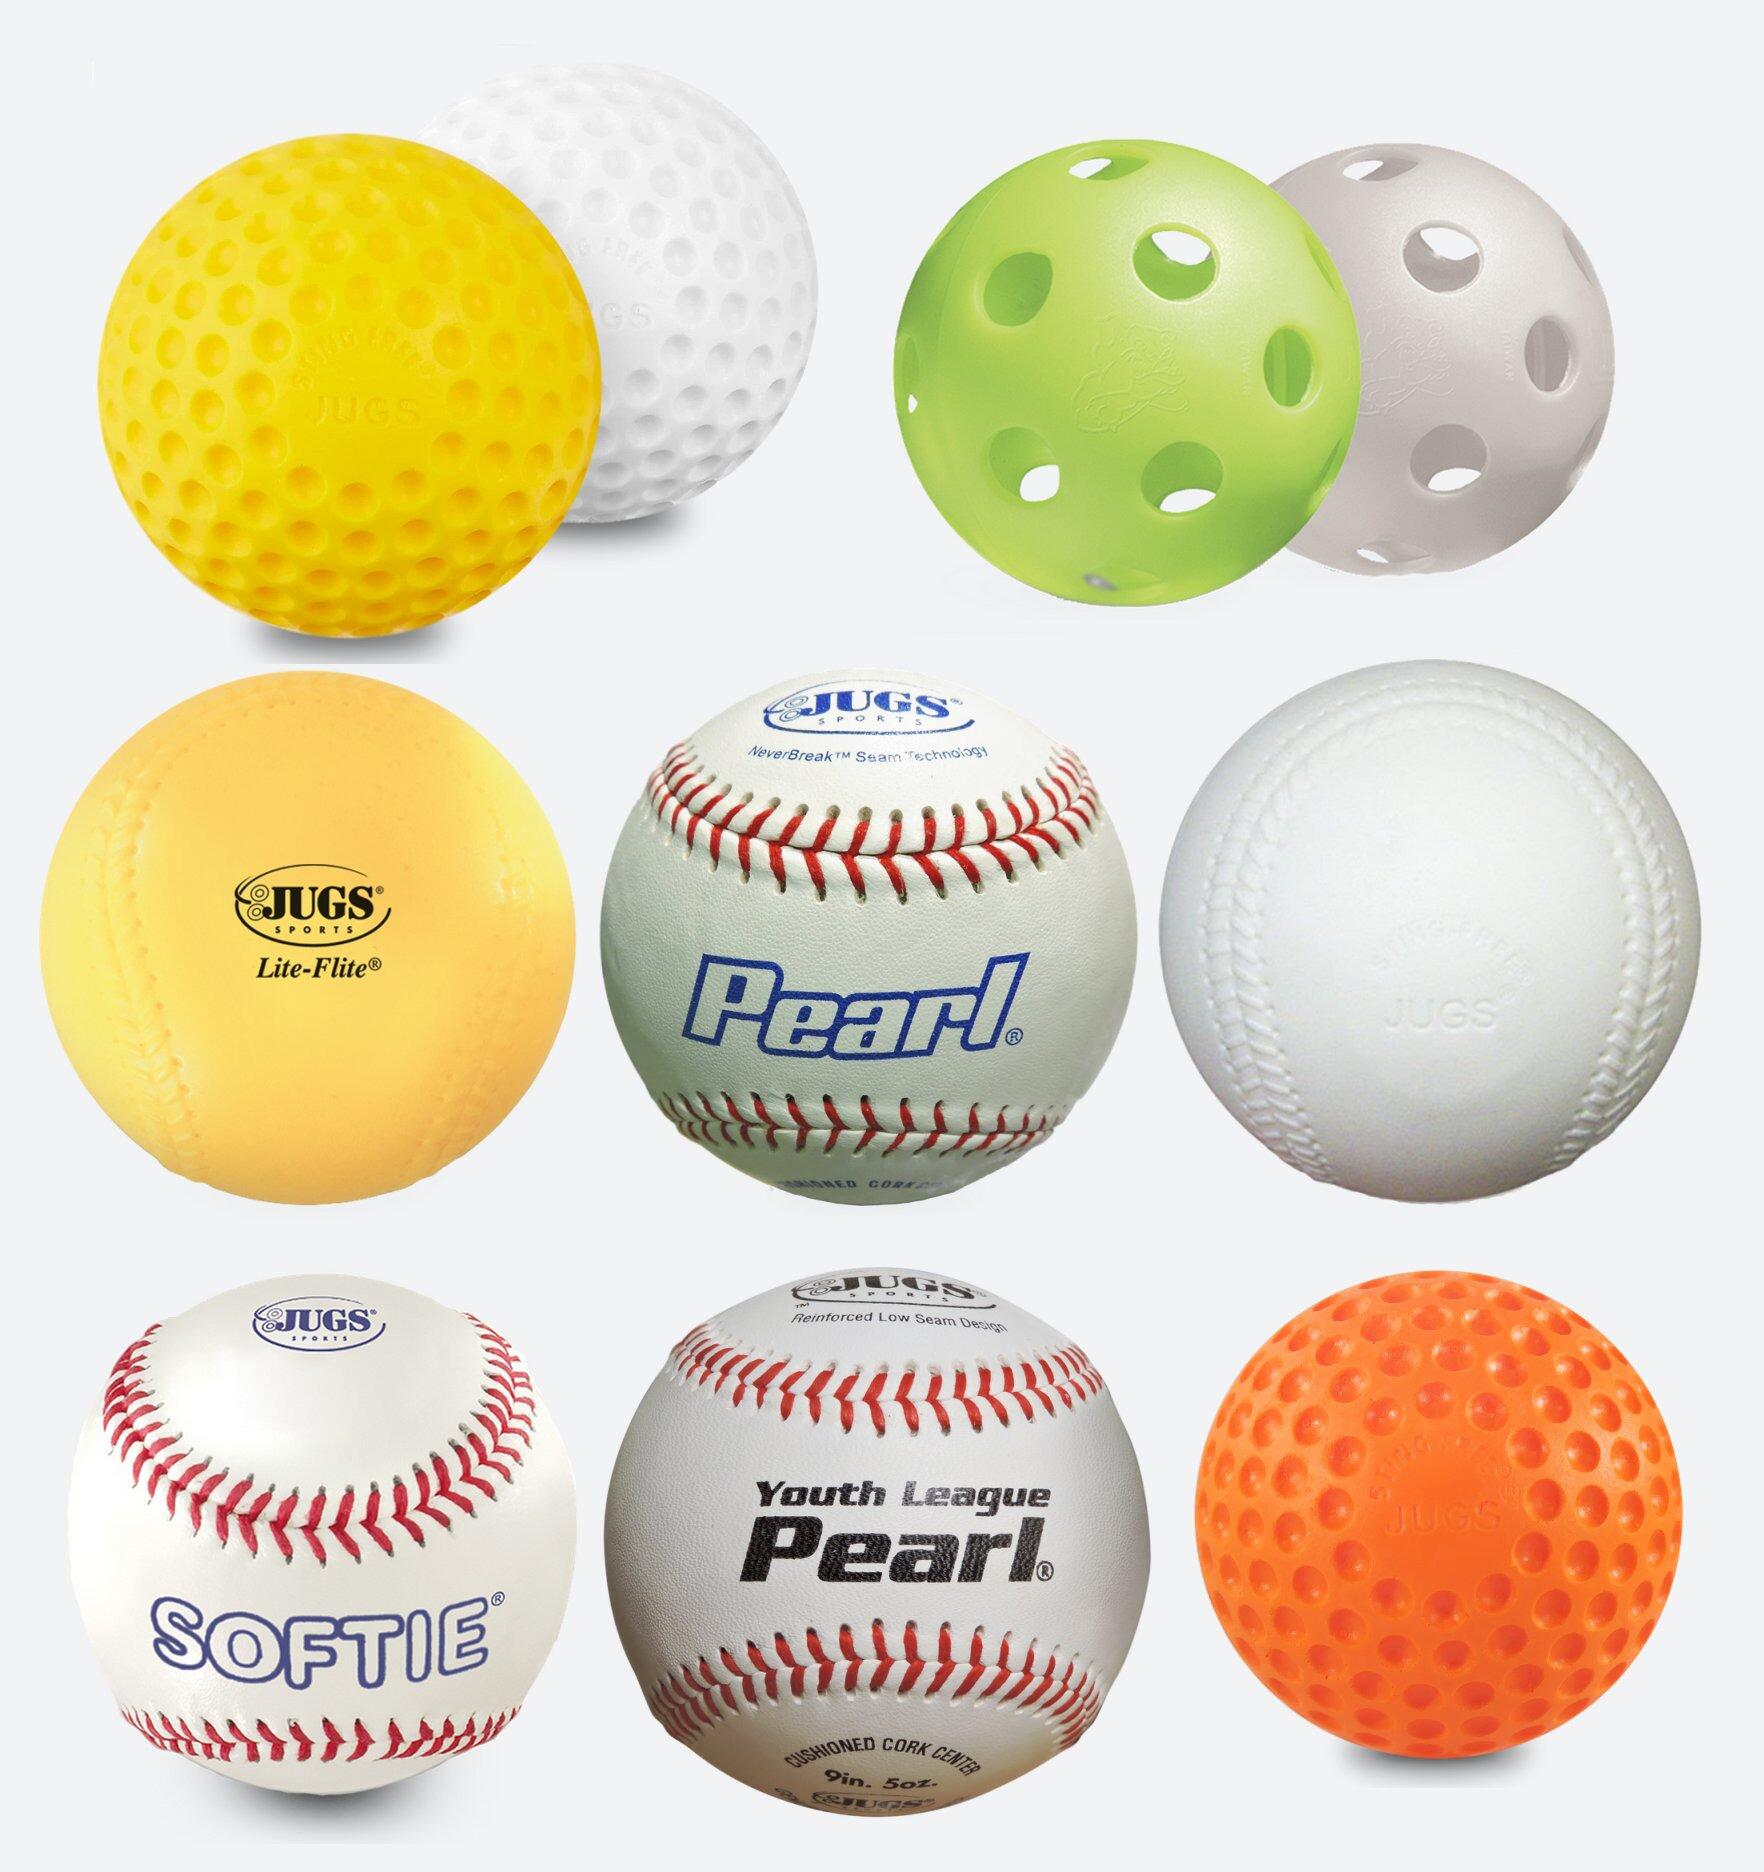 Jugs baseballs, pearl baseballs, lite-flite, bulldog polyballs, youth league baseballs, sting-free dimple pitching machine baseballs, softie, maximum velocity